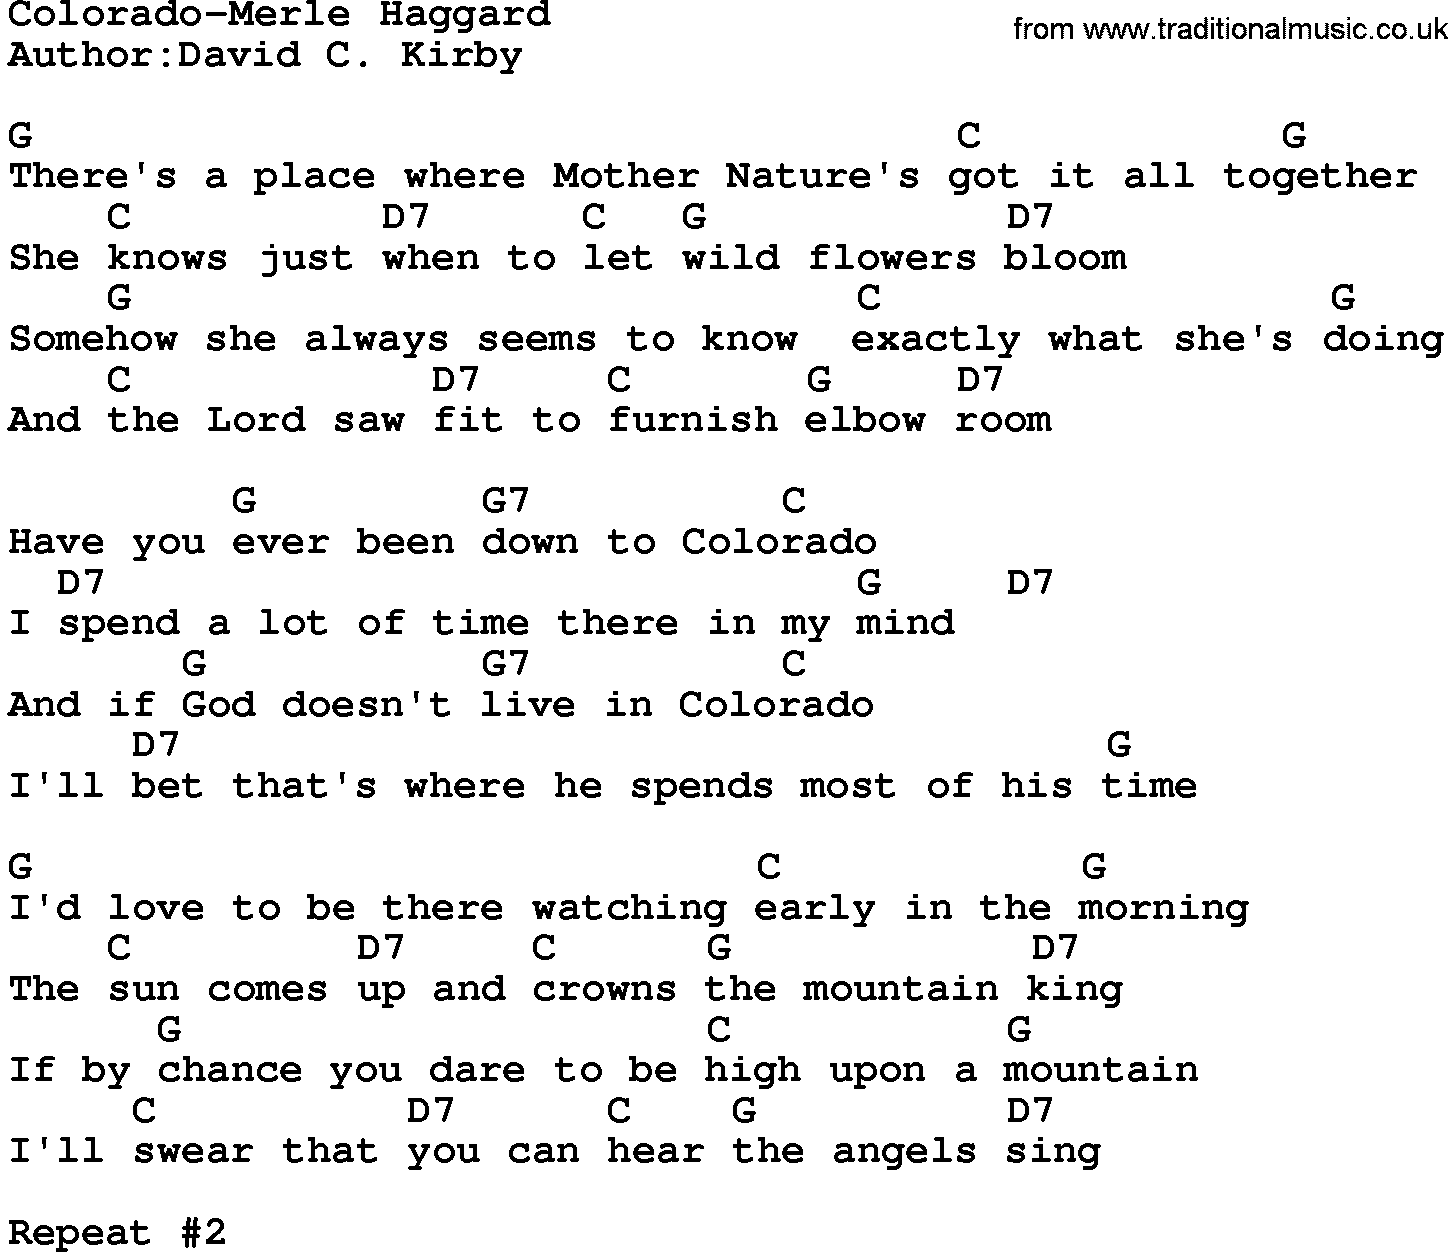 Country music song: Colorado-Merle Haggard lyrics and chords